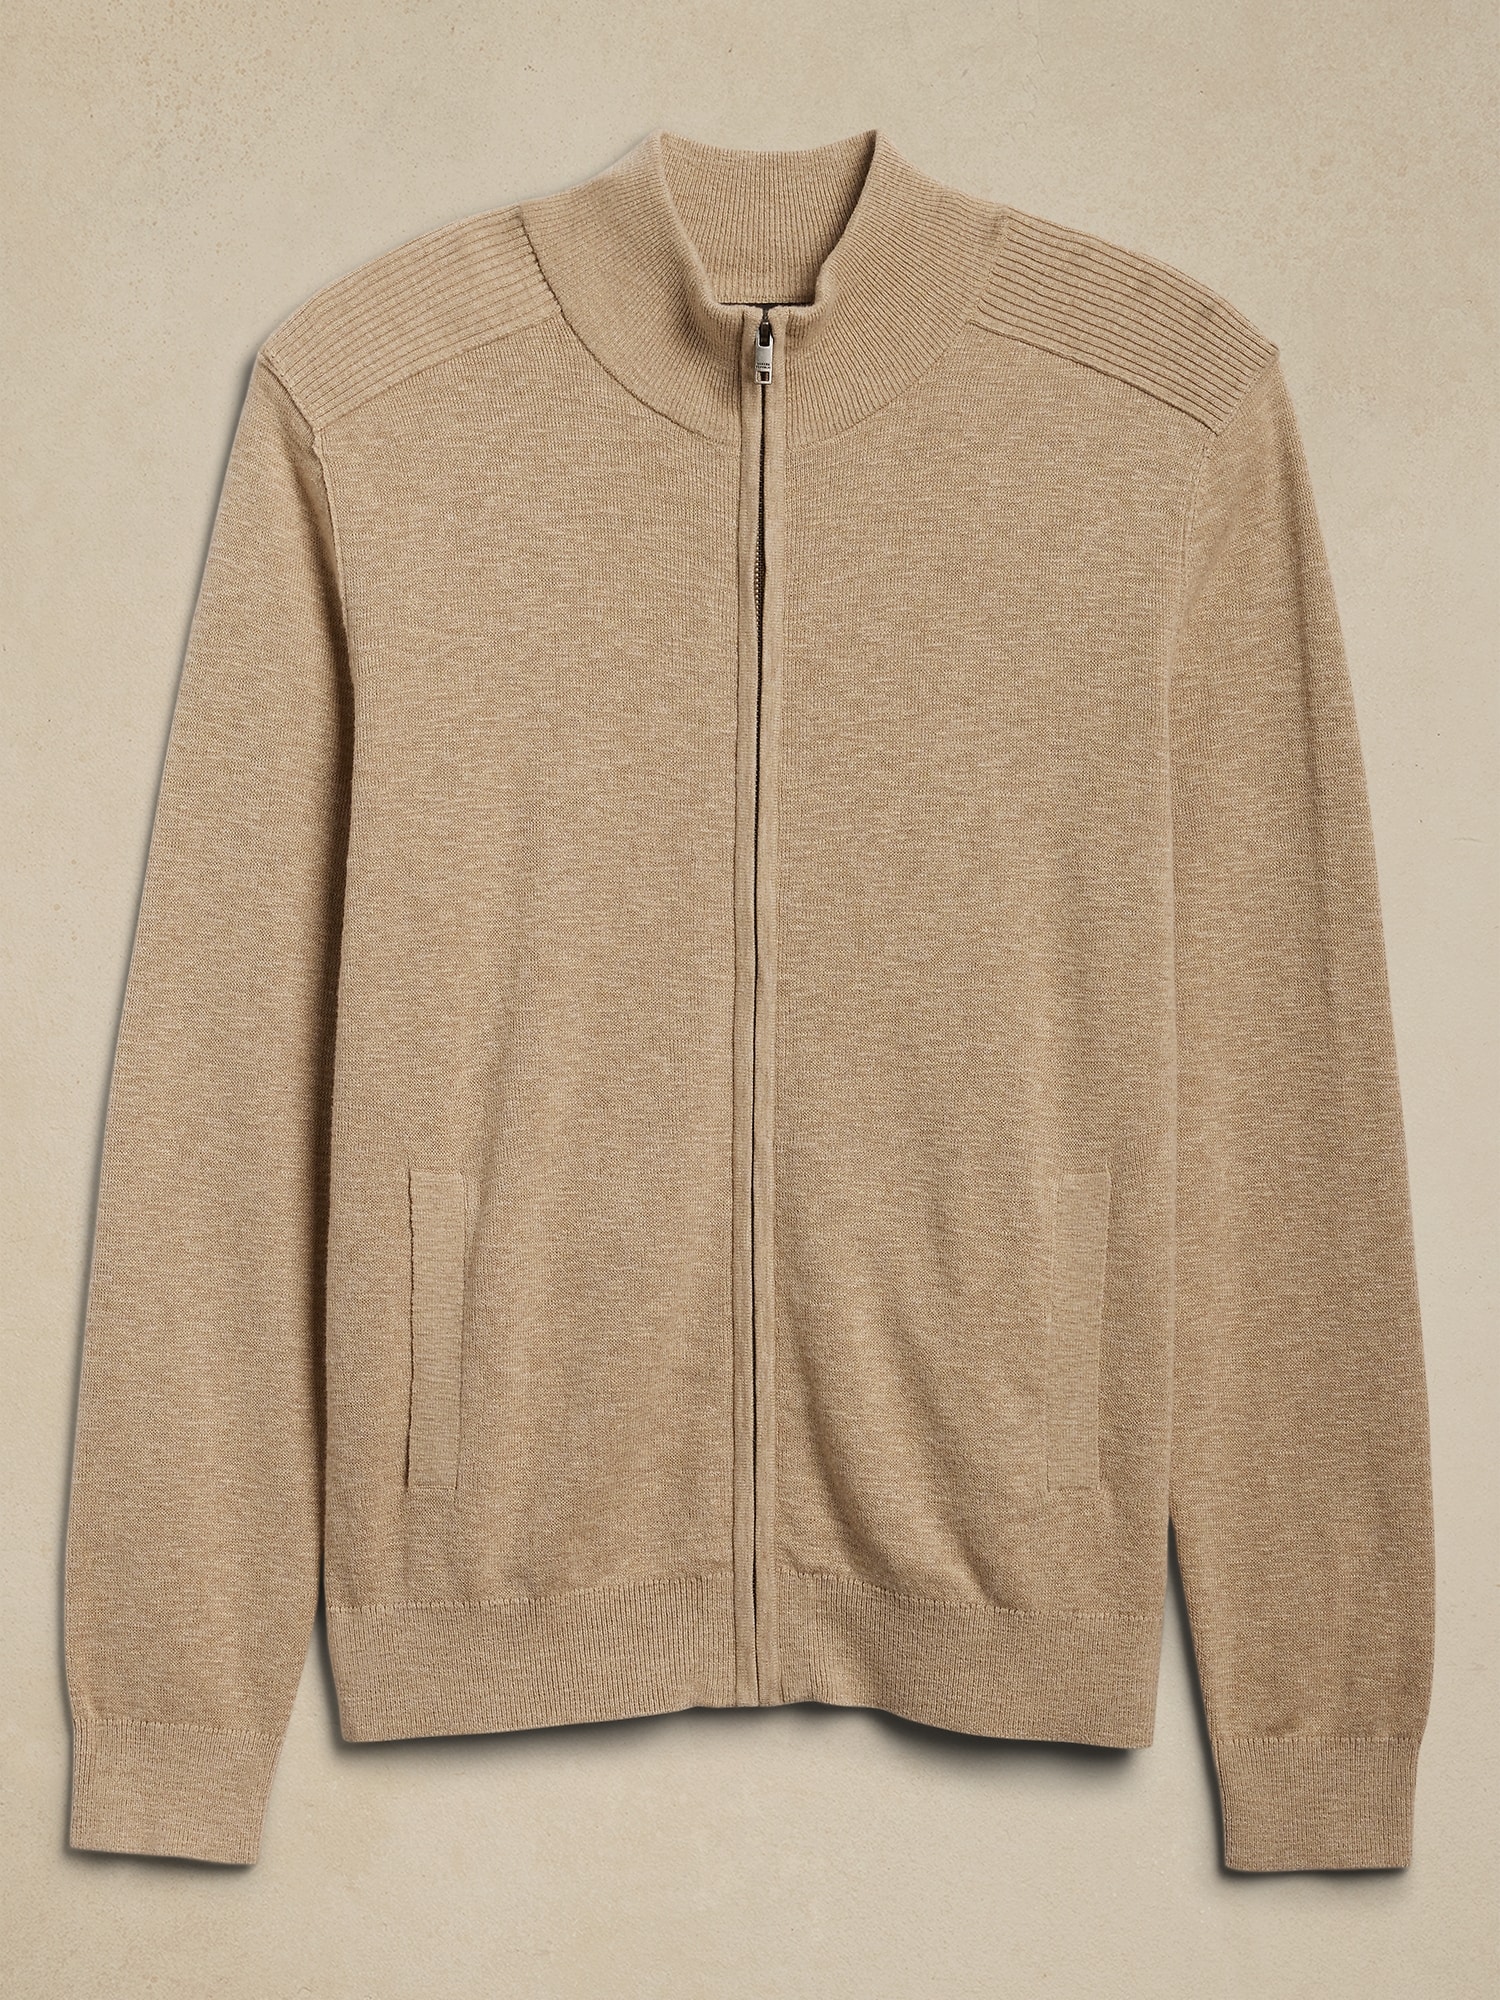 Cotton Slub Sweater Jacket